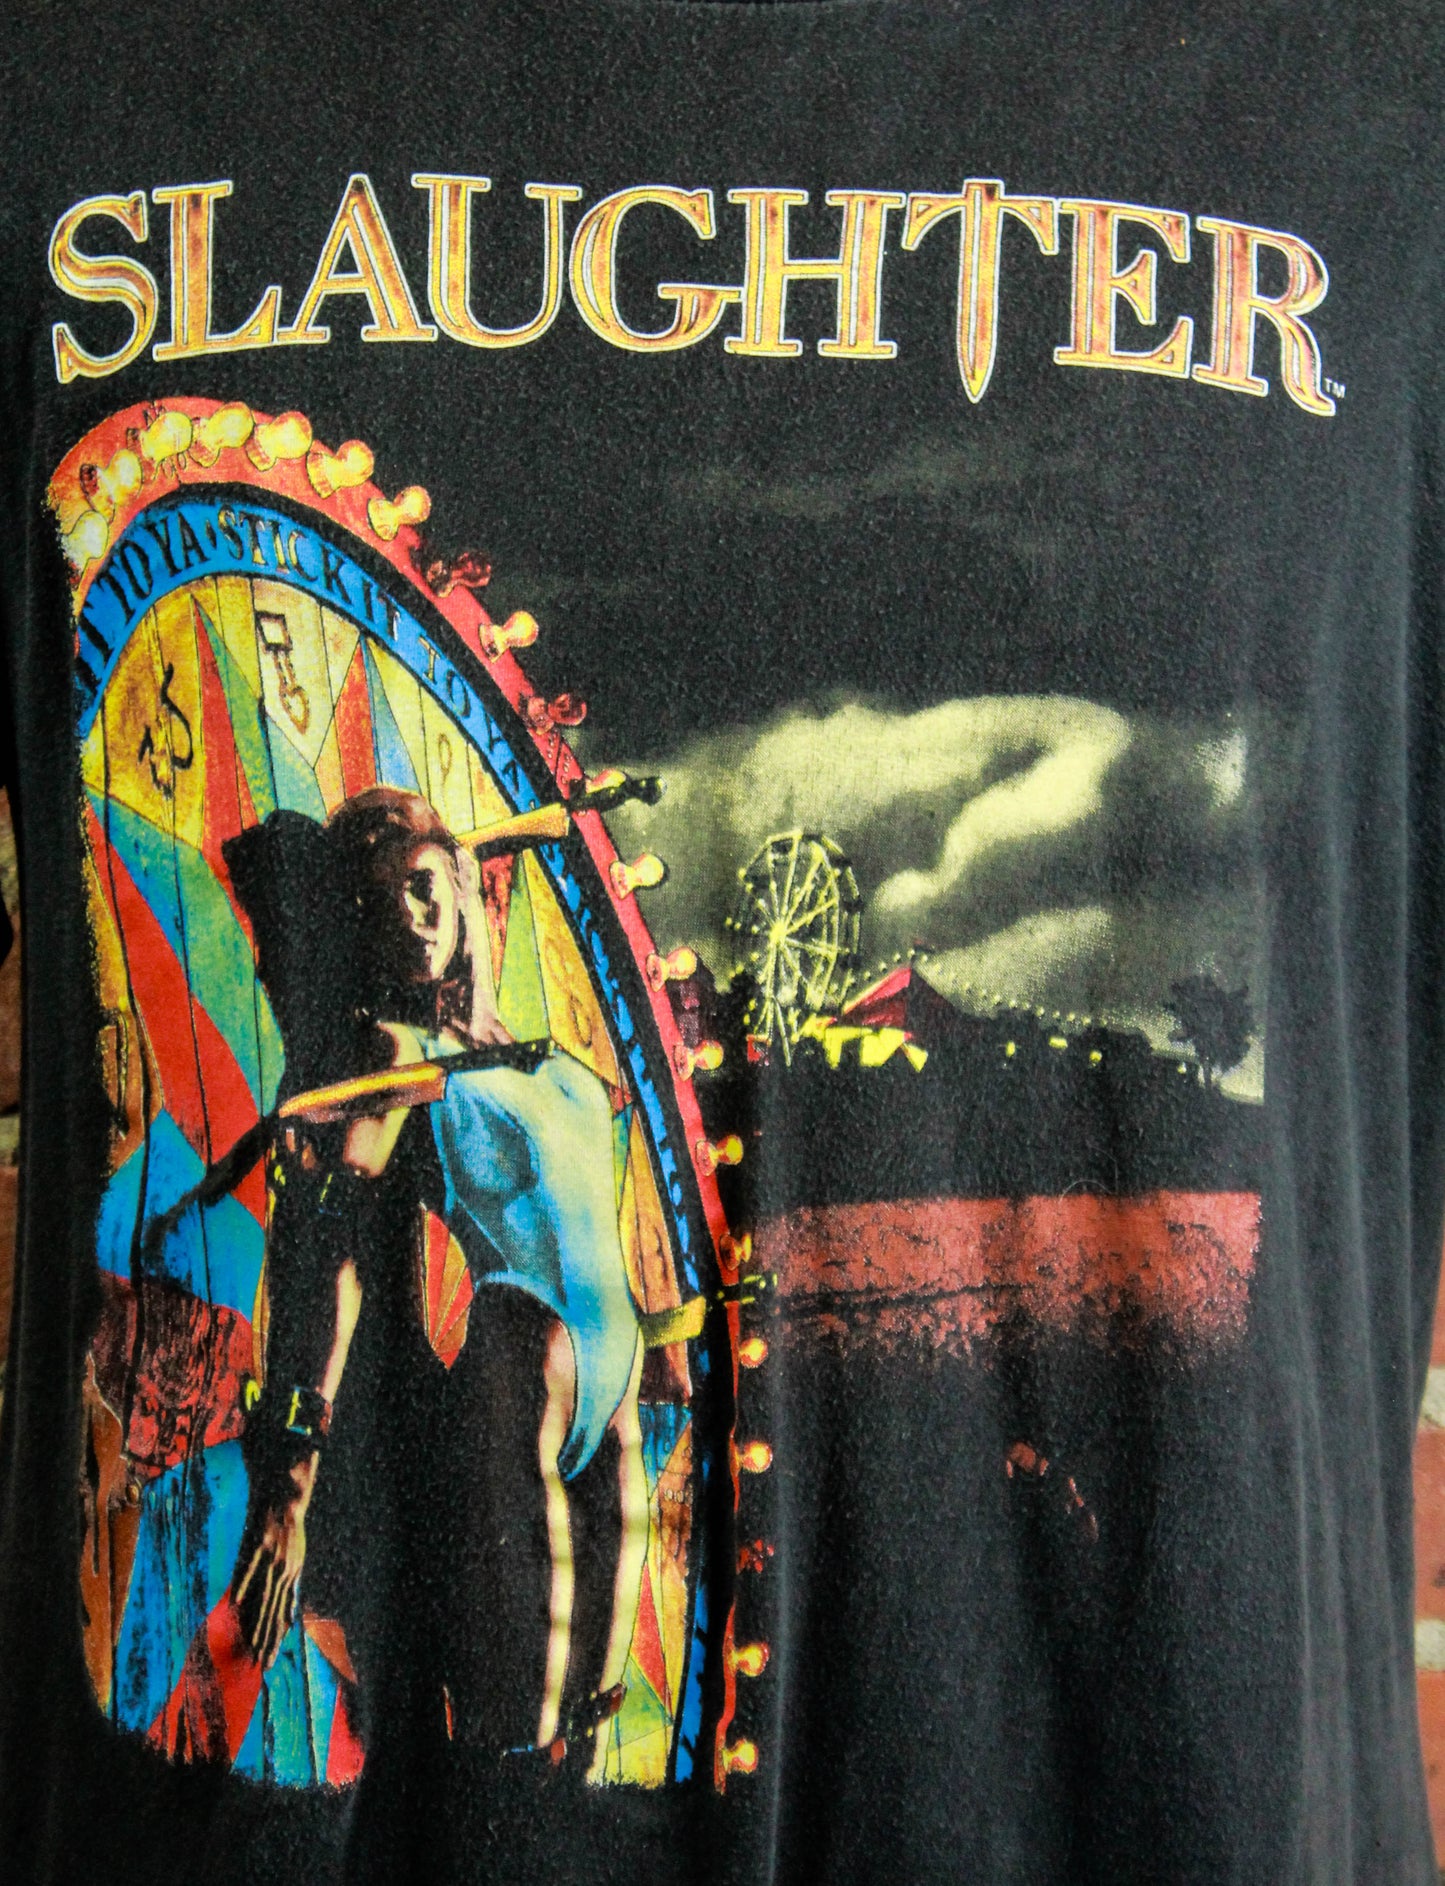 Vintage Slaughter Concert T Shirt Stick It To Ya! Unisex Large 1990